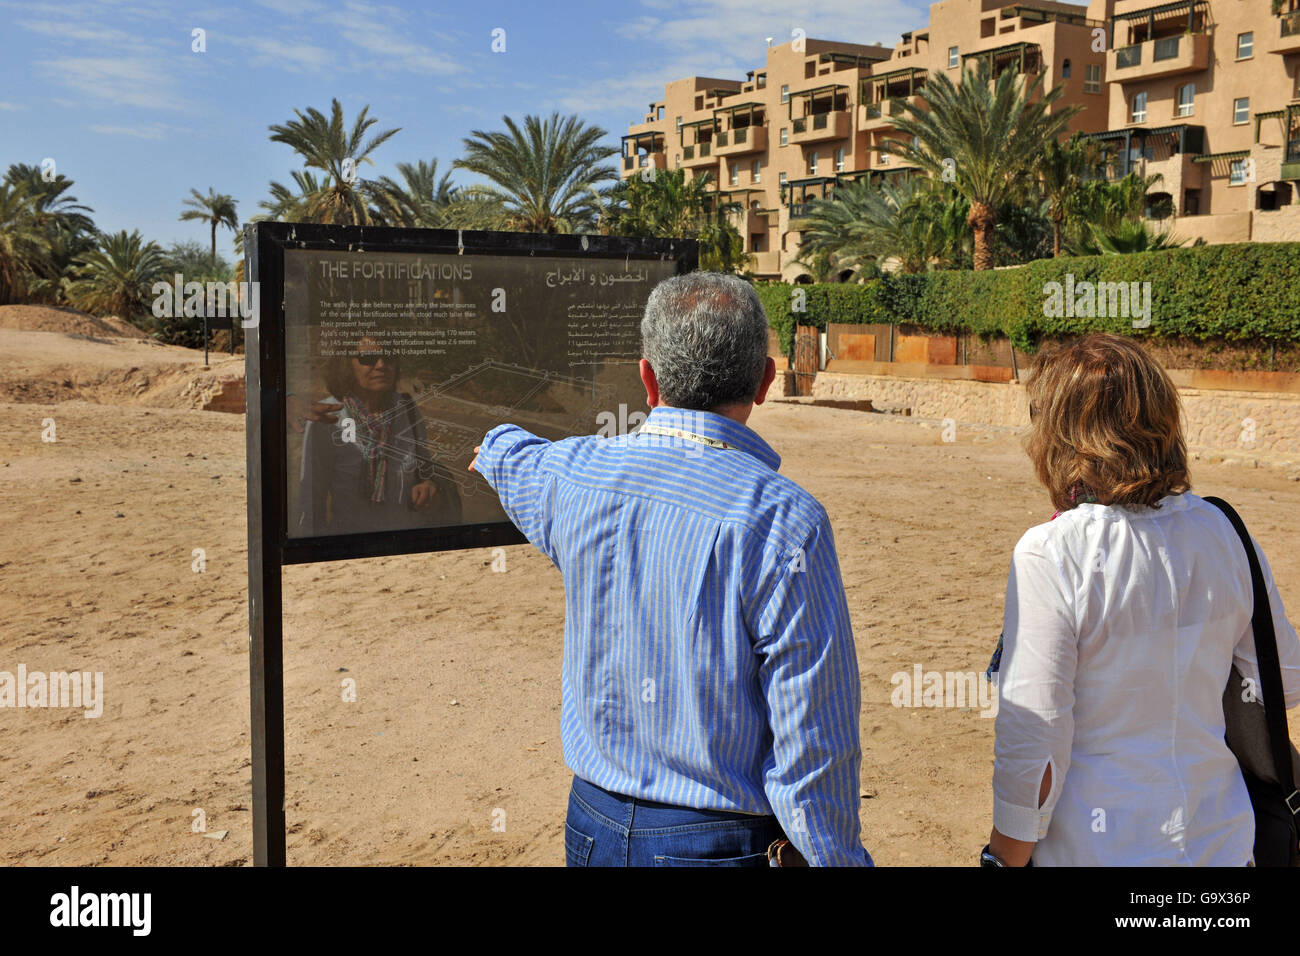 tourist information and sign, historic site of islamic city of Ayla, Aquaba, Jordan / Akaba Stock Photo